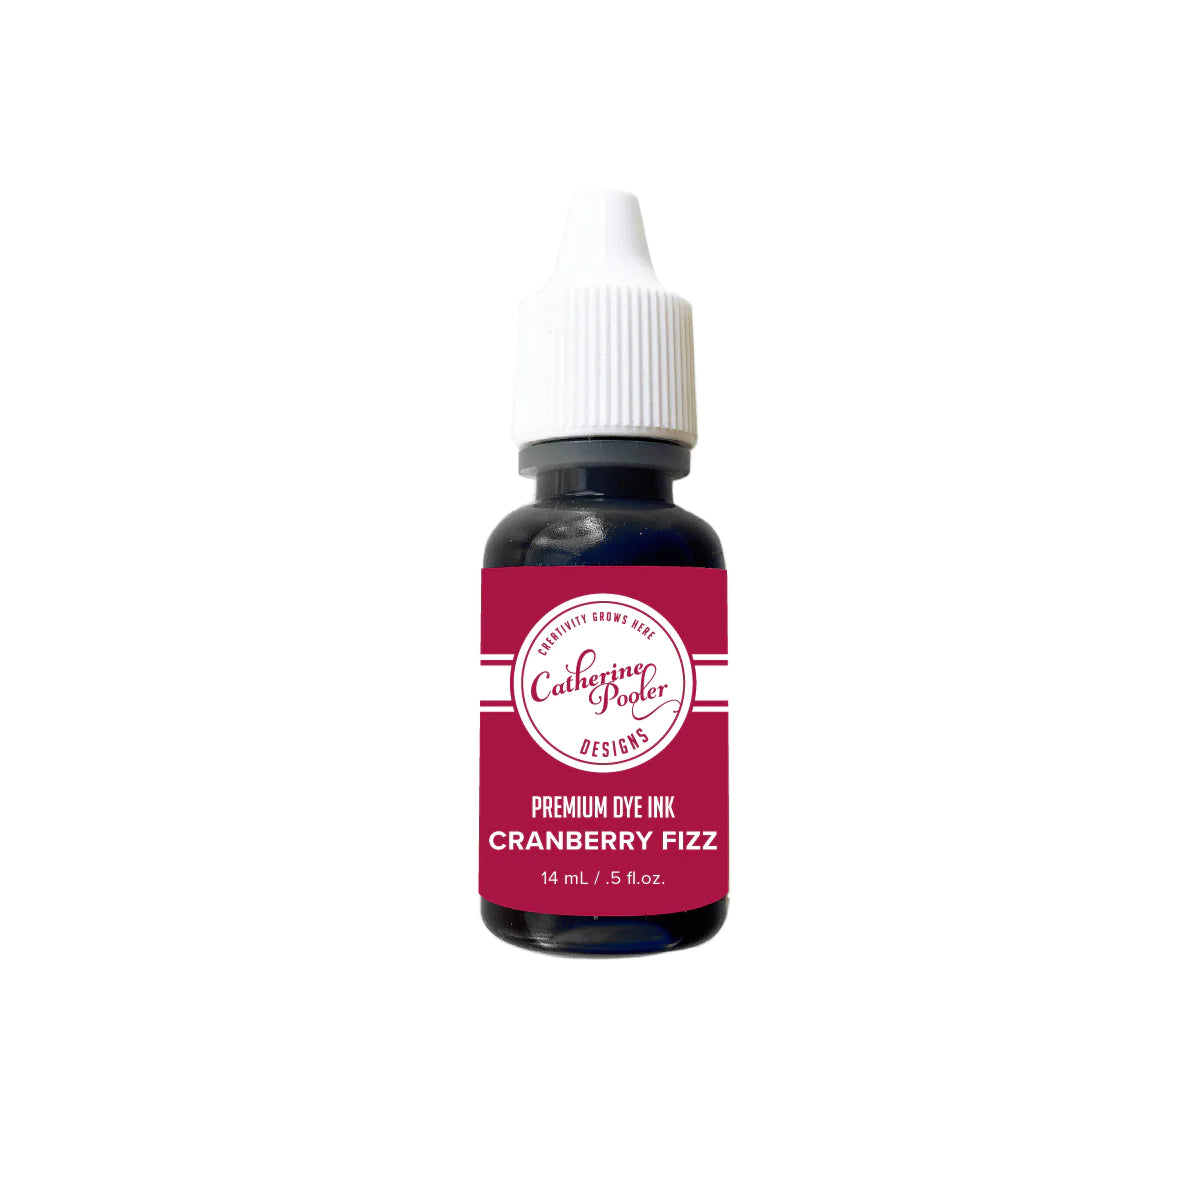 Cranberry Fizz Premium Dye Ink Refill